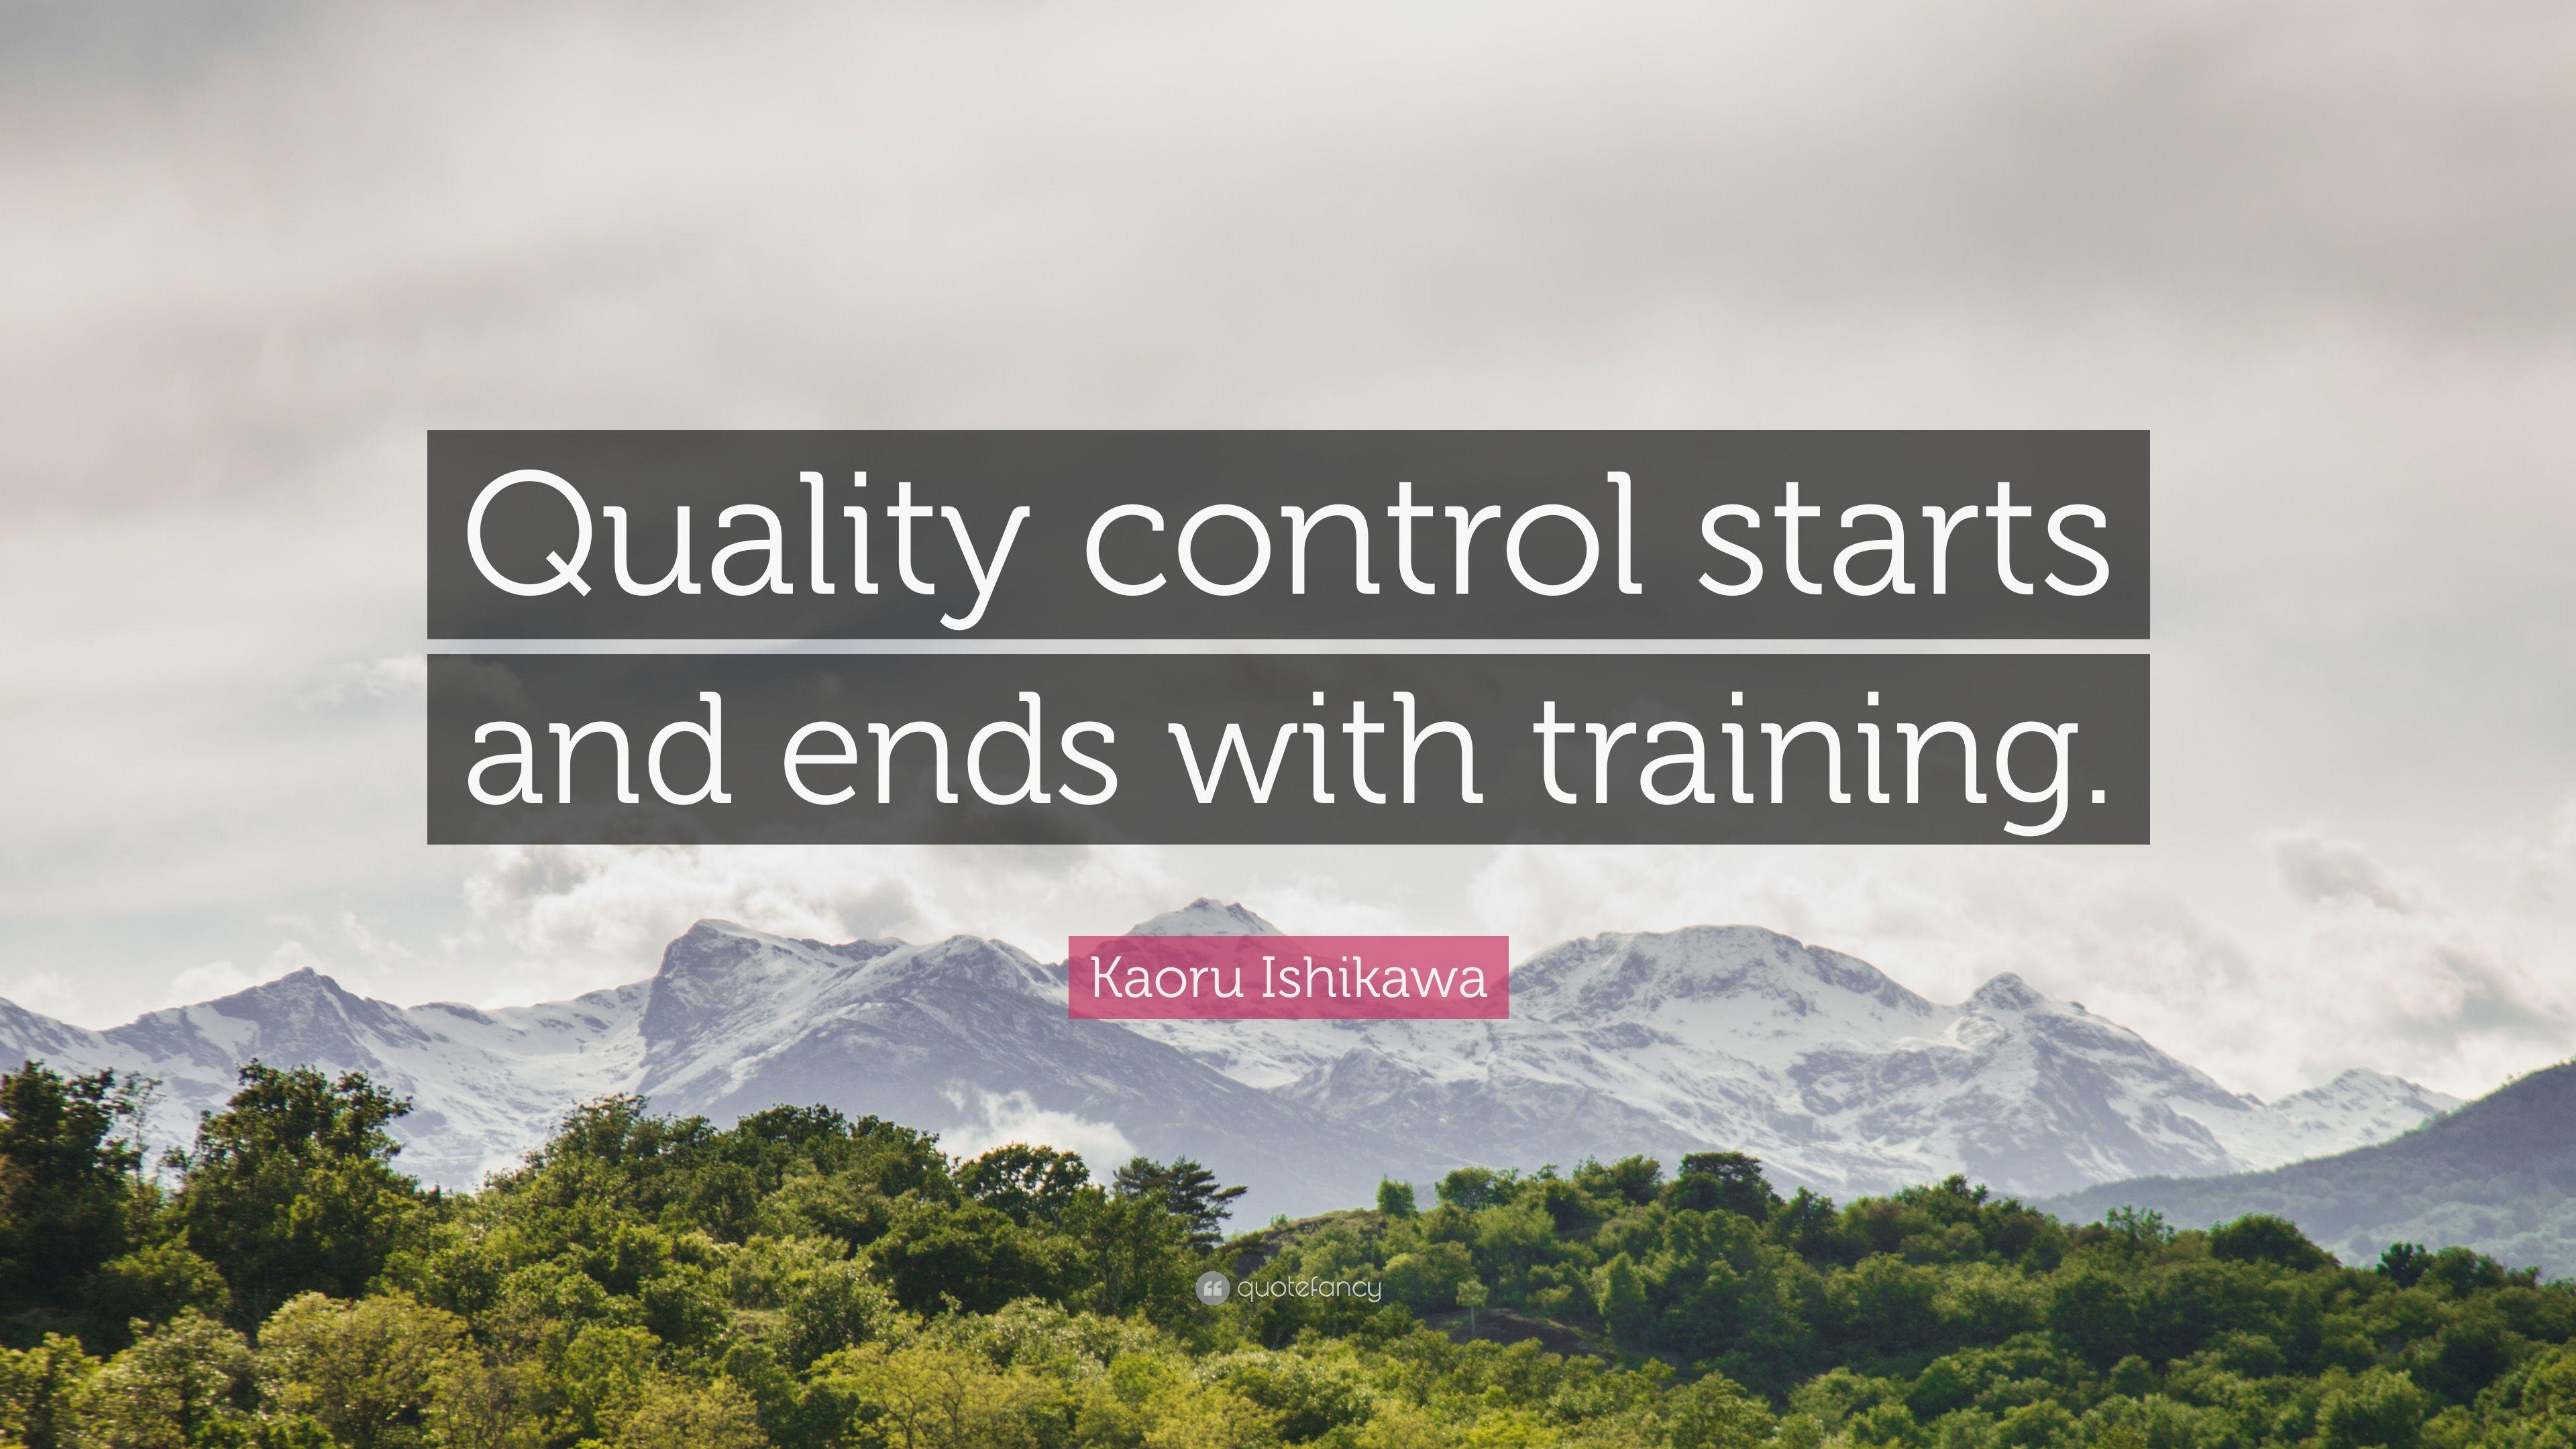 Kaoru Ishikawa Quote: “Quality control starts and ends with training